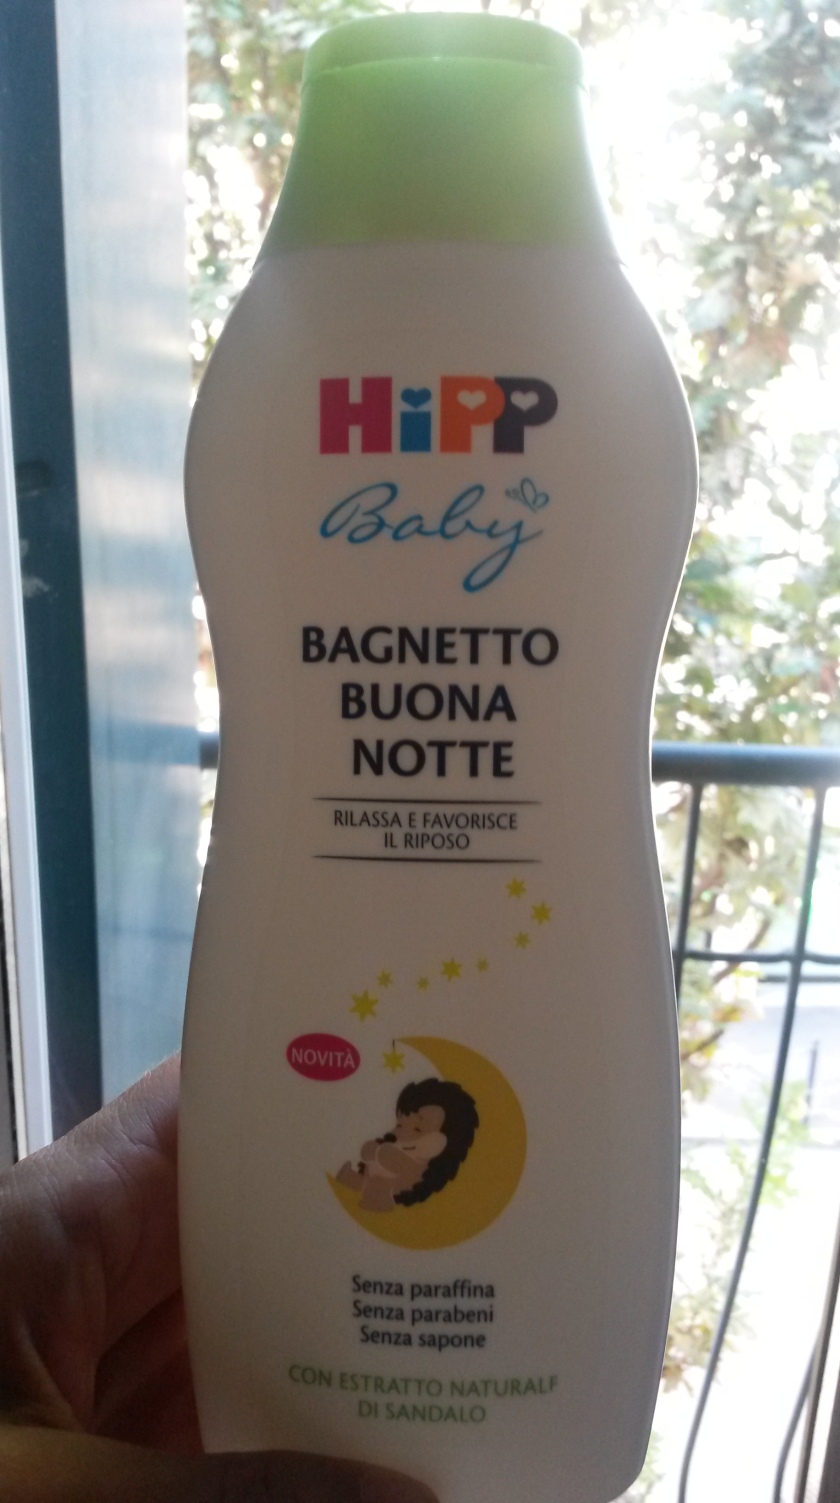 Happy Bagnetto HiPP : Recensioni